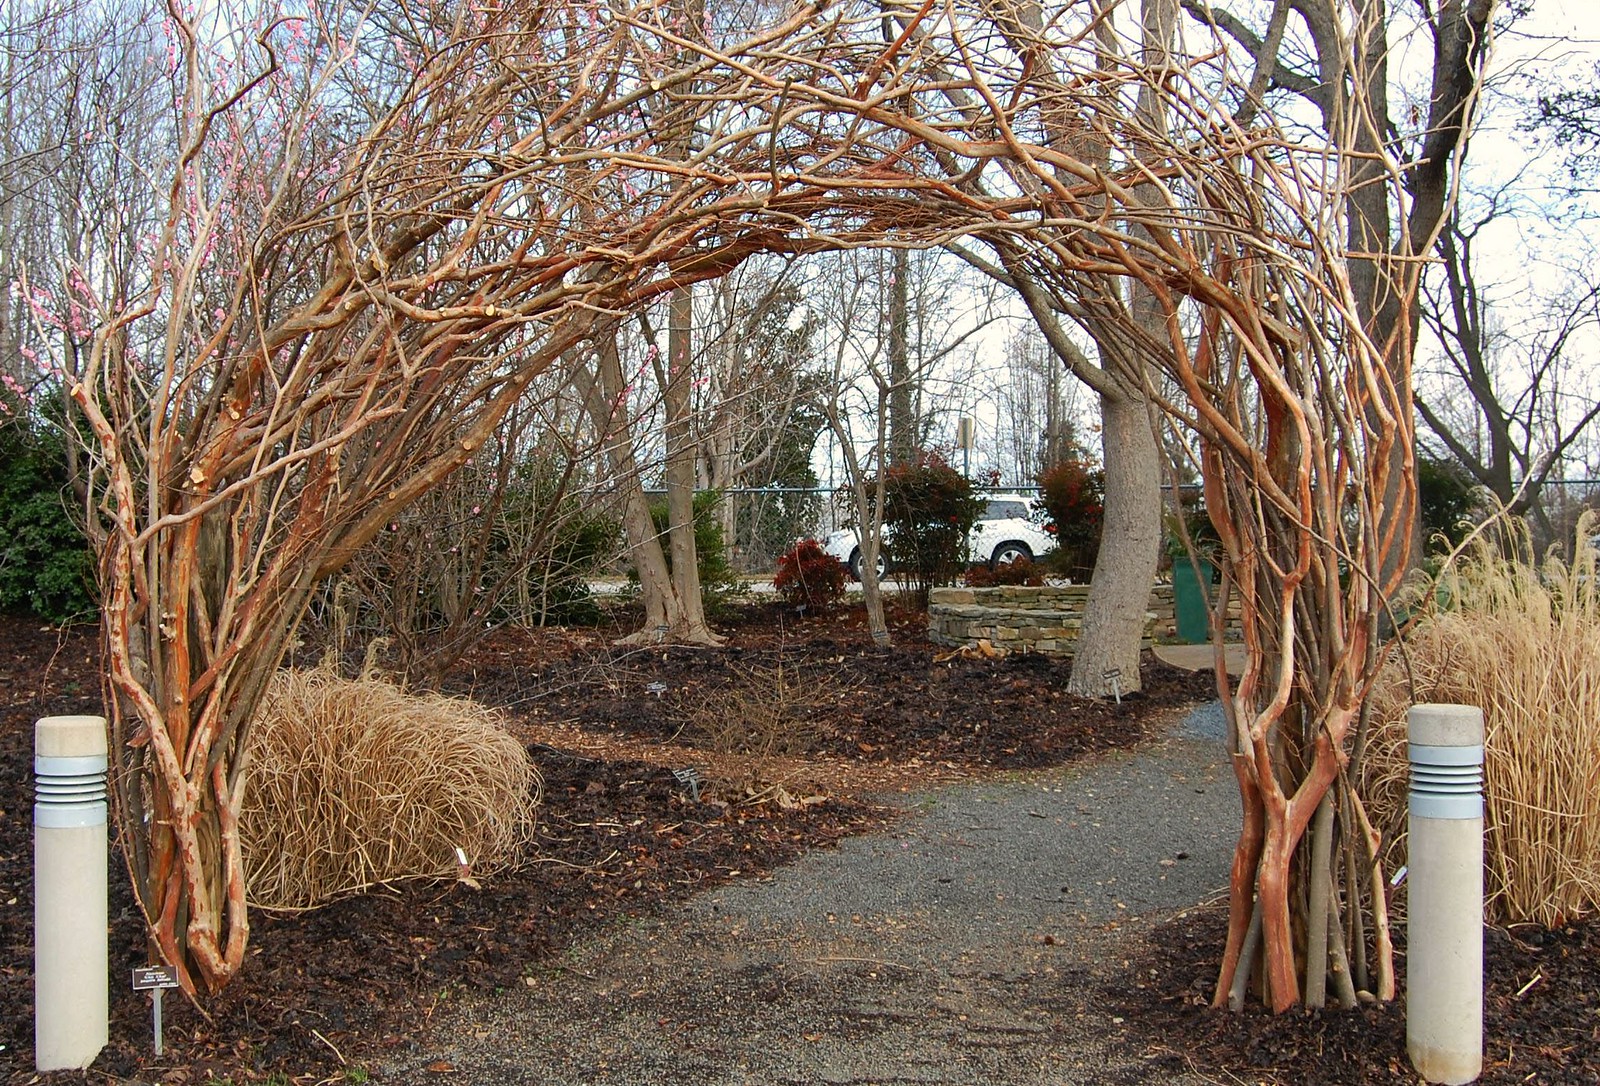 The J. C. Raulston Arboretum in Raleigh, N. C., - A Late Winter Visit